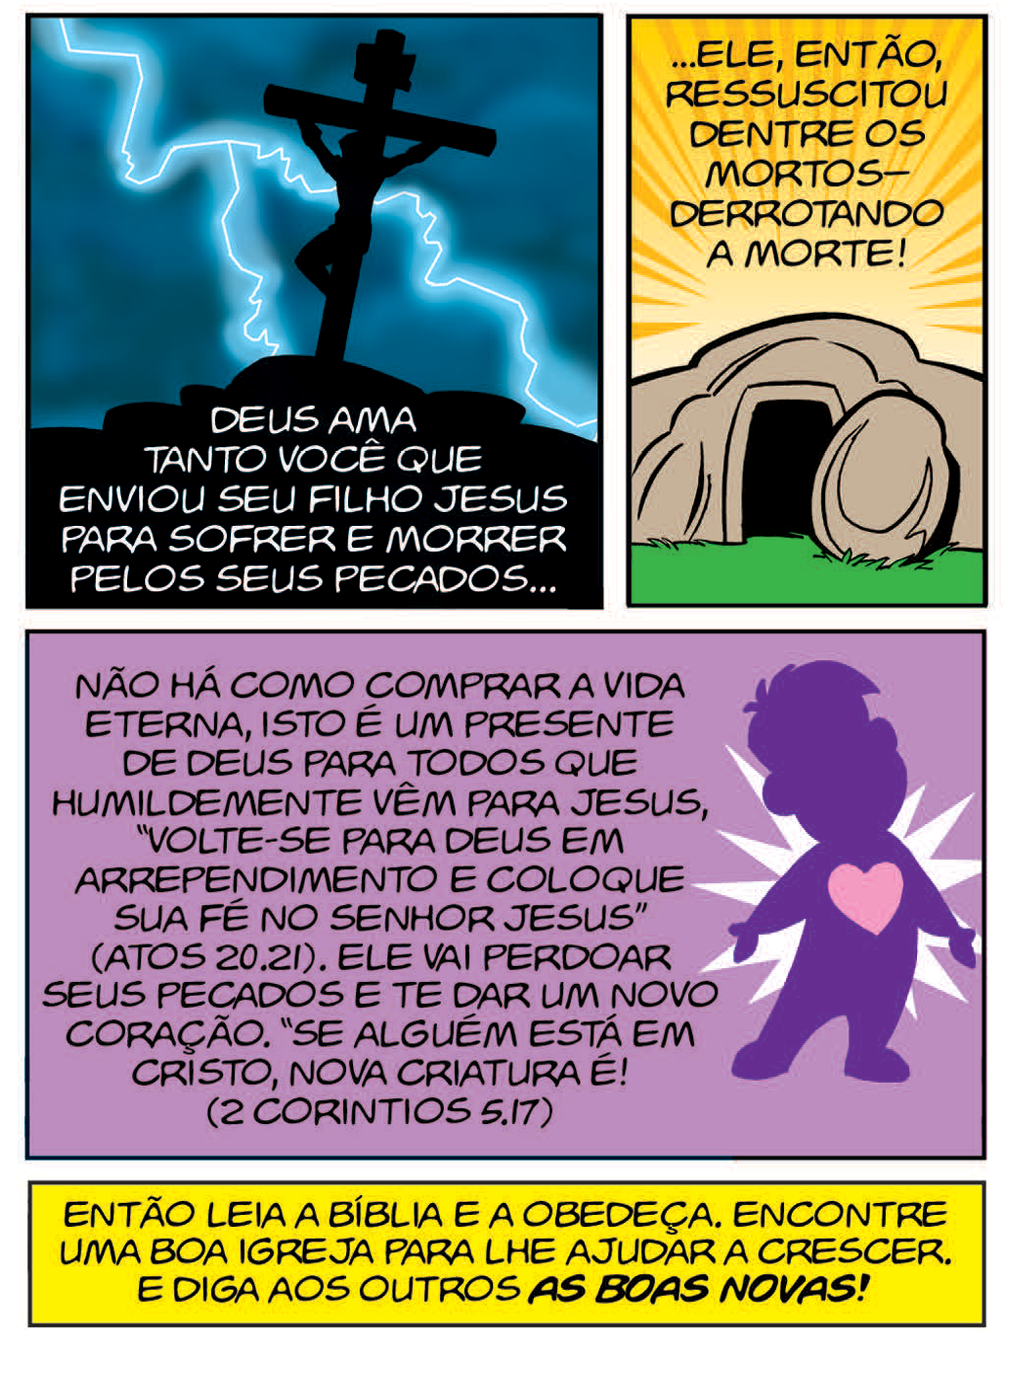 Gospel Tract - Portuguese My Dear Friend